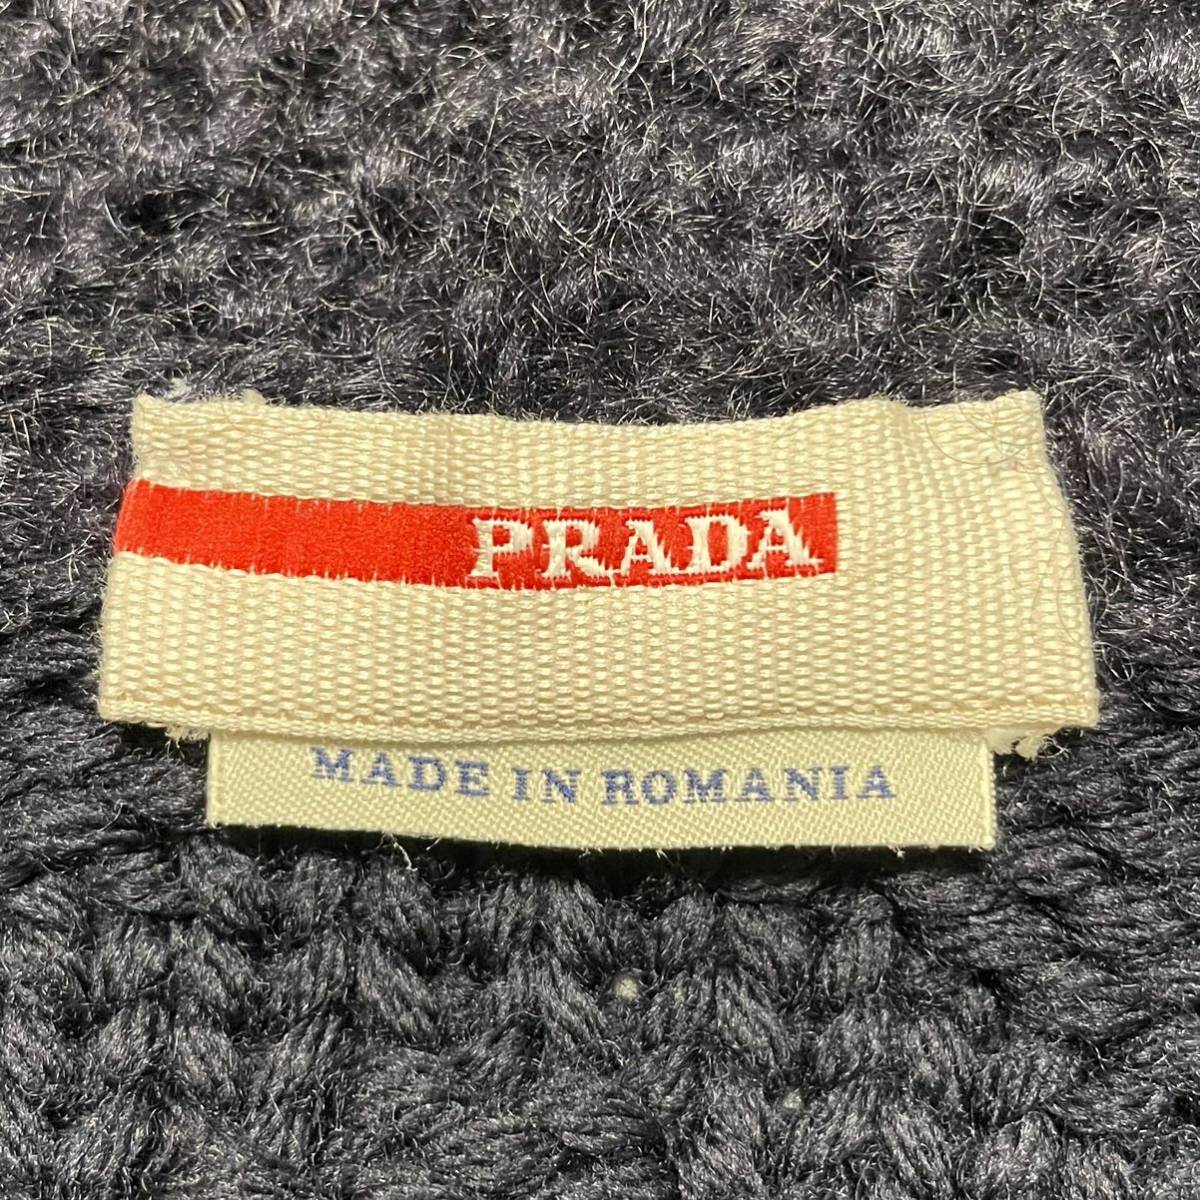  genuine article Prada 100% bar Gin wool knitted poncho cardigan jacket 40 navy navy blue PRADA